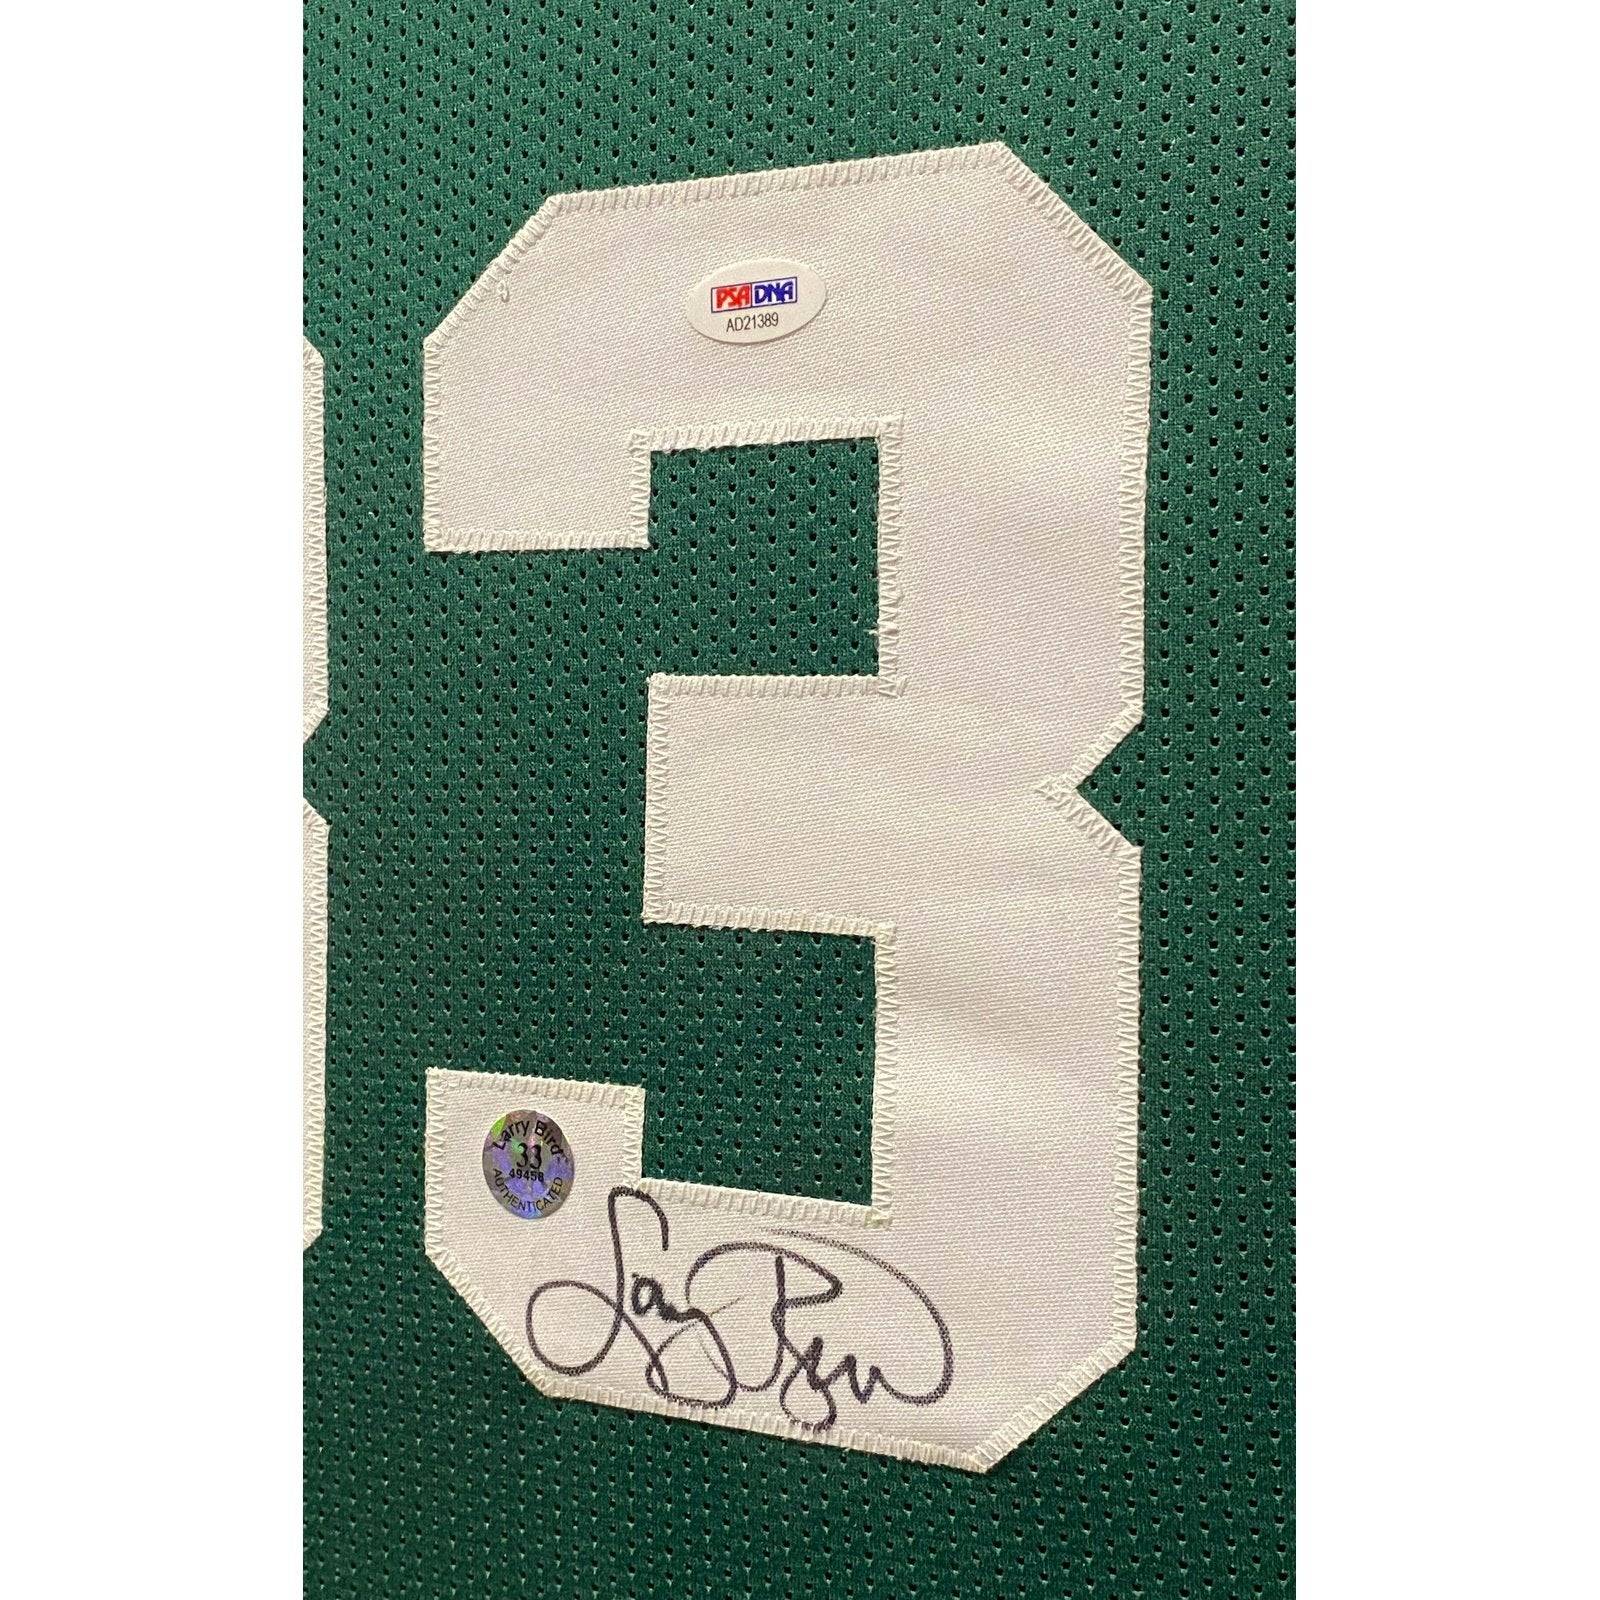 Larry Bird Framed Jersey PSA/DNA Autographed Signed Boston Celtics